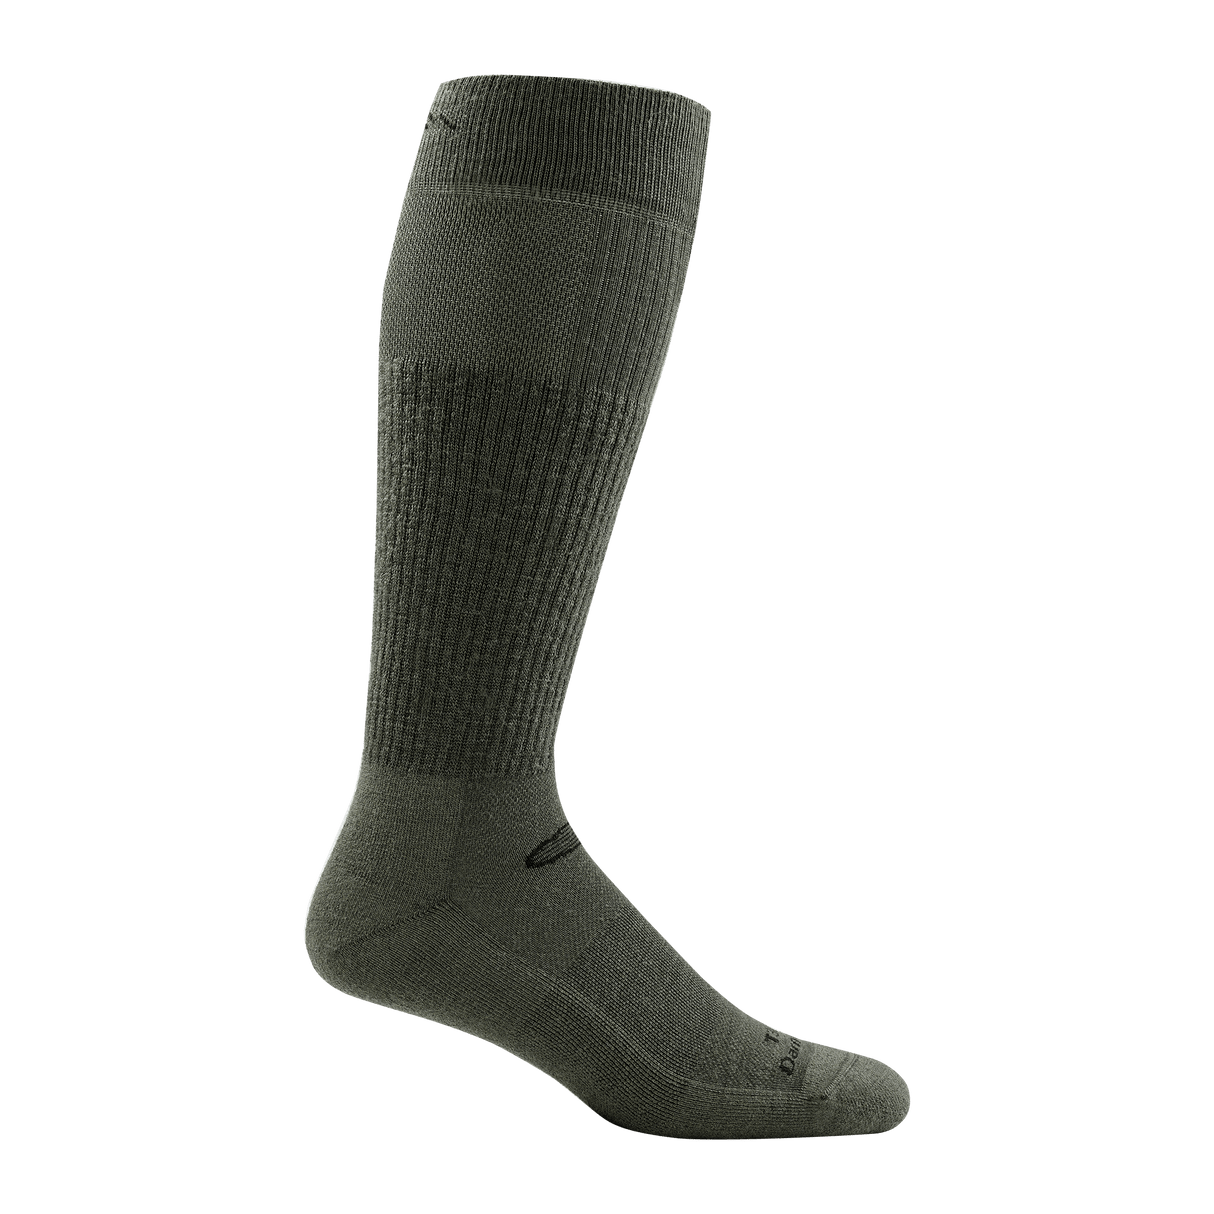 Darn Tough Mid-Calf Lightweight Tactical Socks with Cushion  -  X-Small / Foliage Green